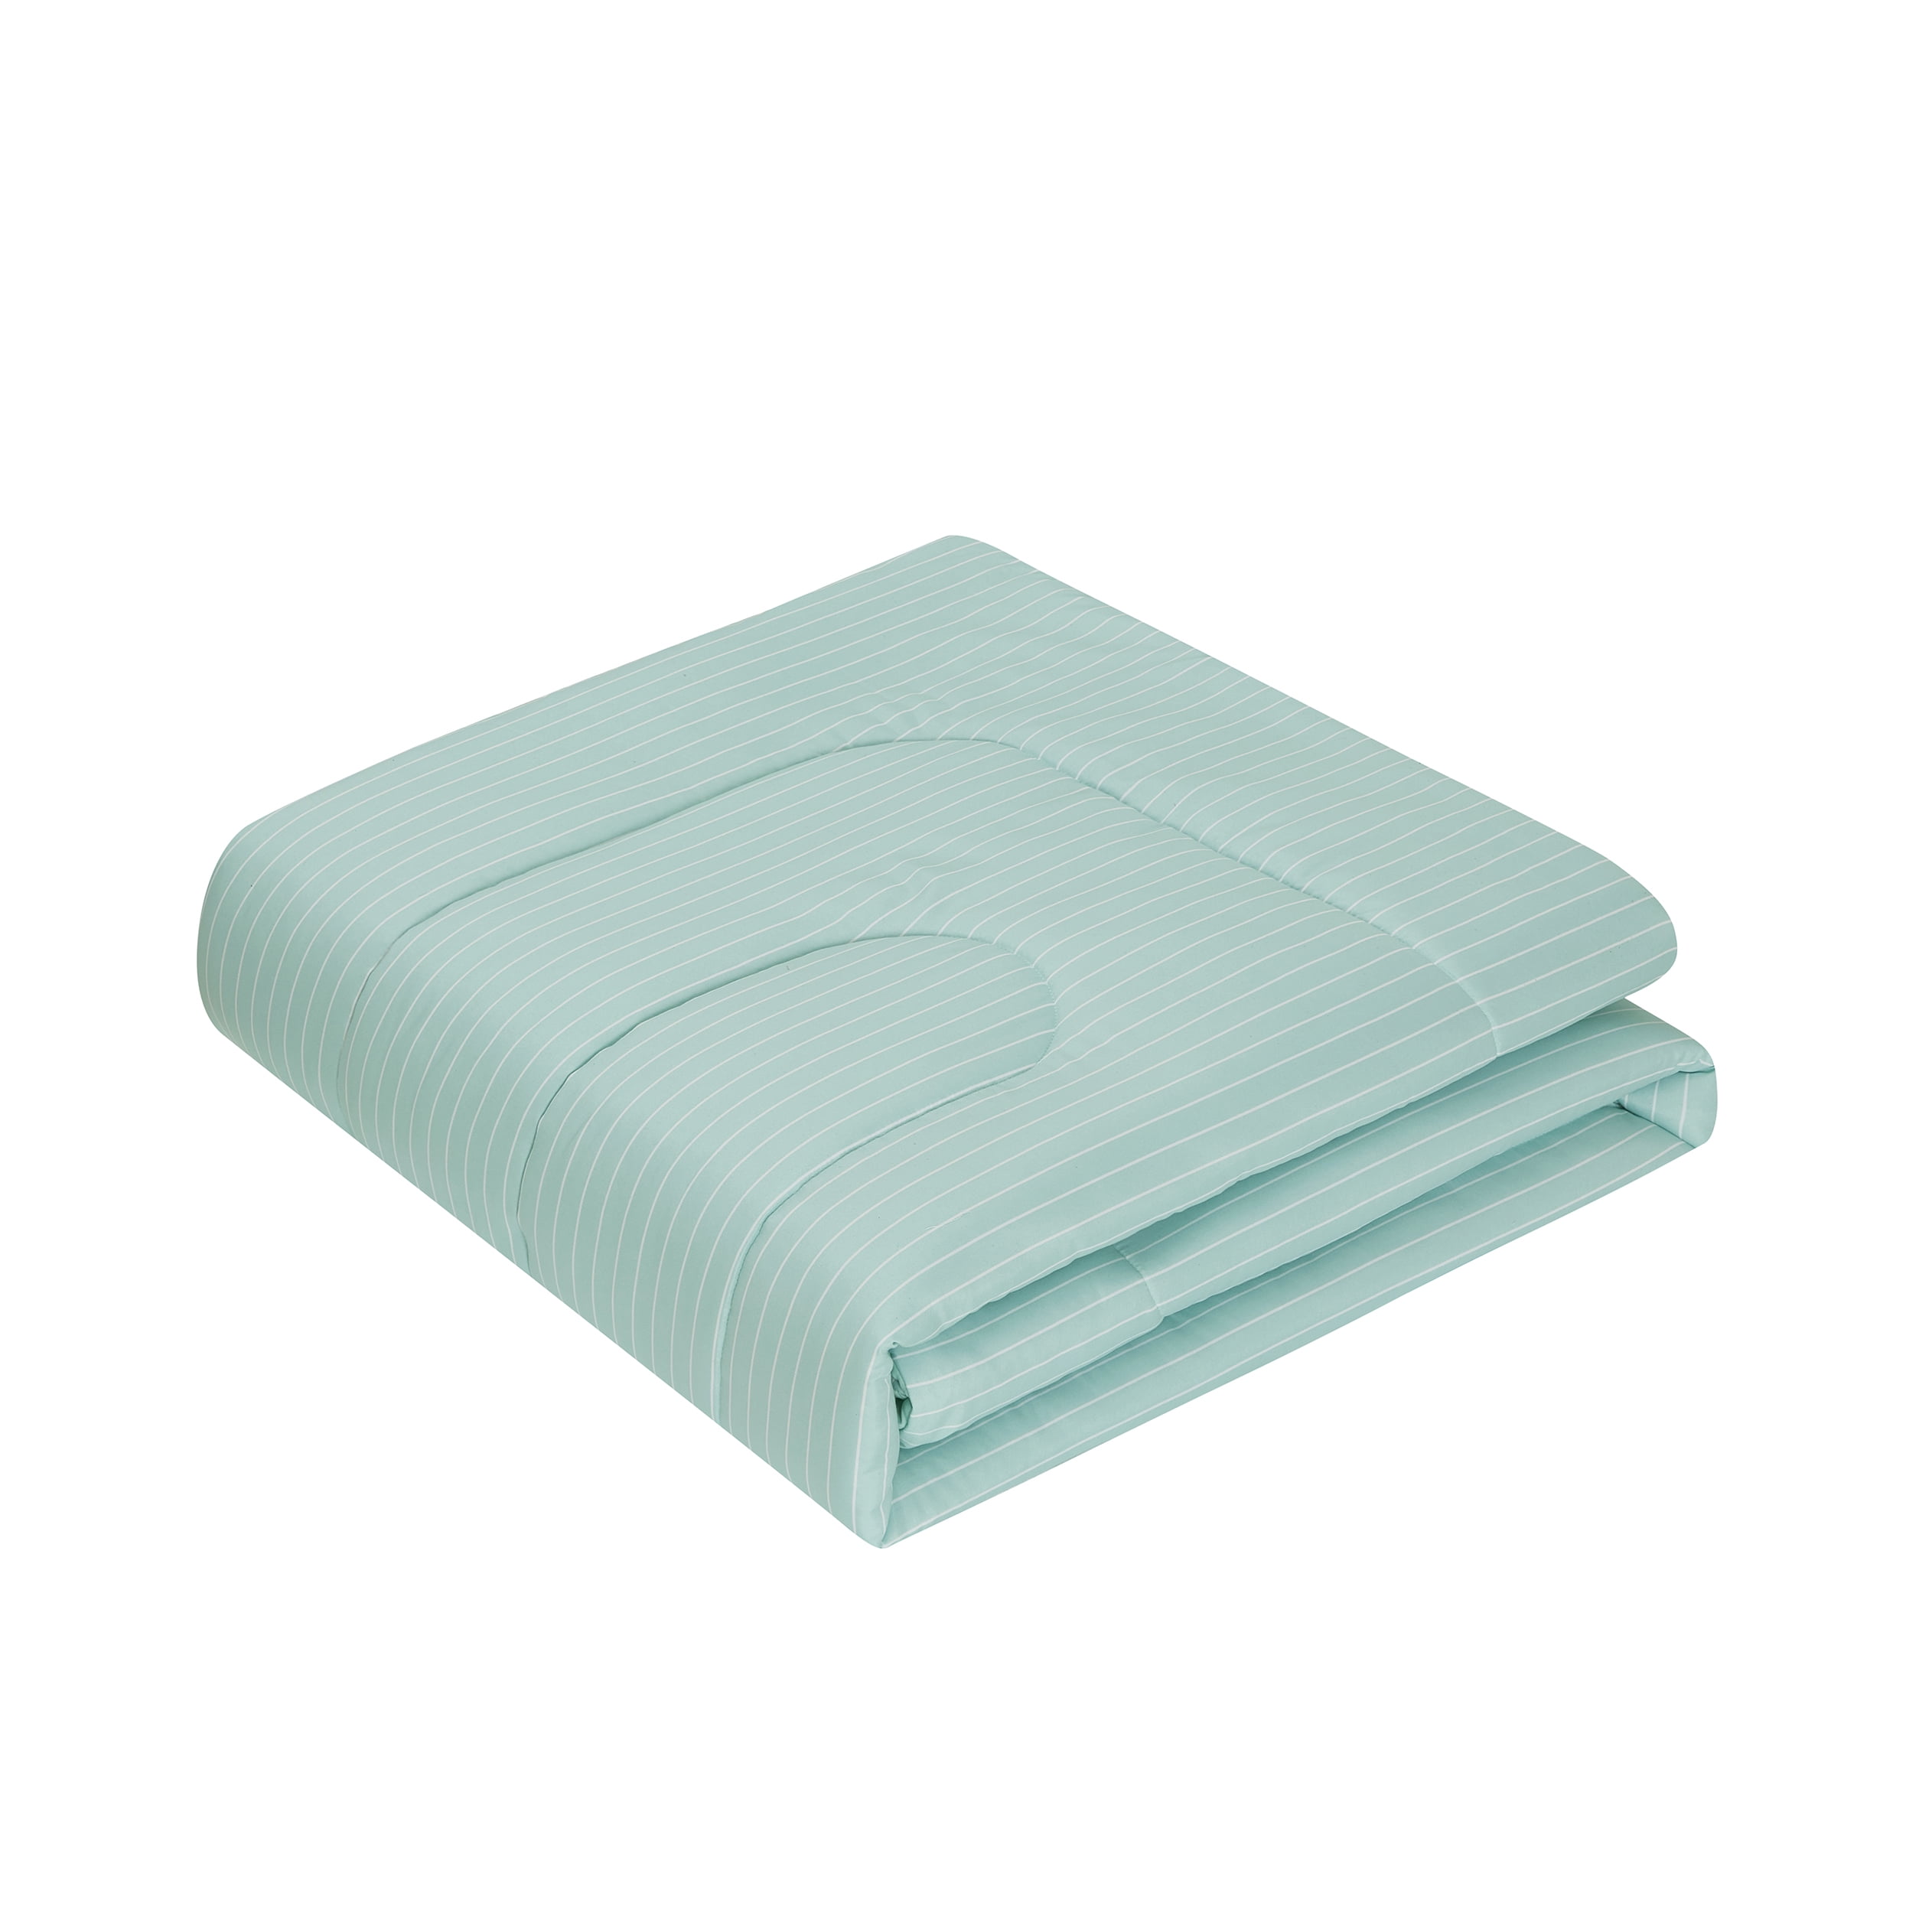 Mainstays Princeton Teal Stripe 7 Piece Comforter Bedding Set Size: Full/Queen